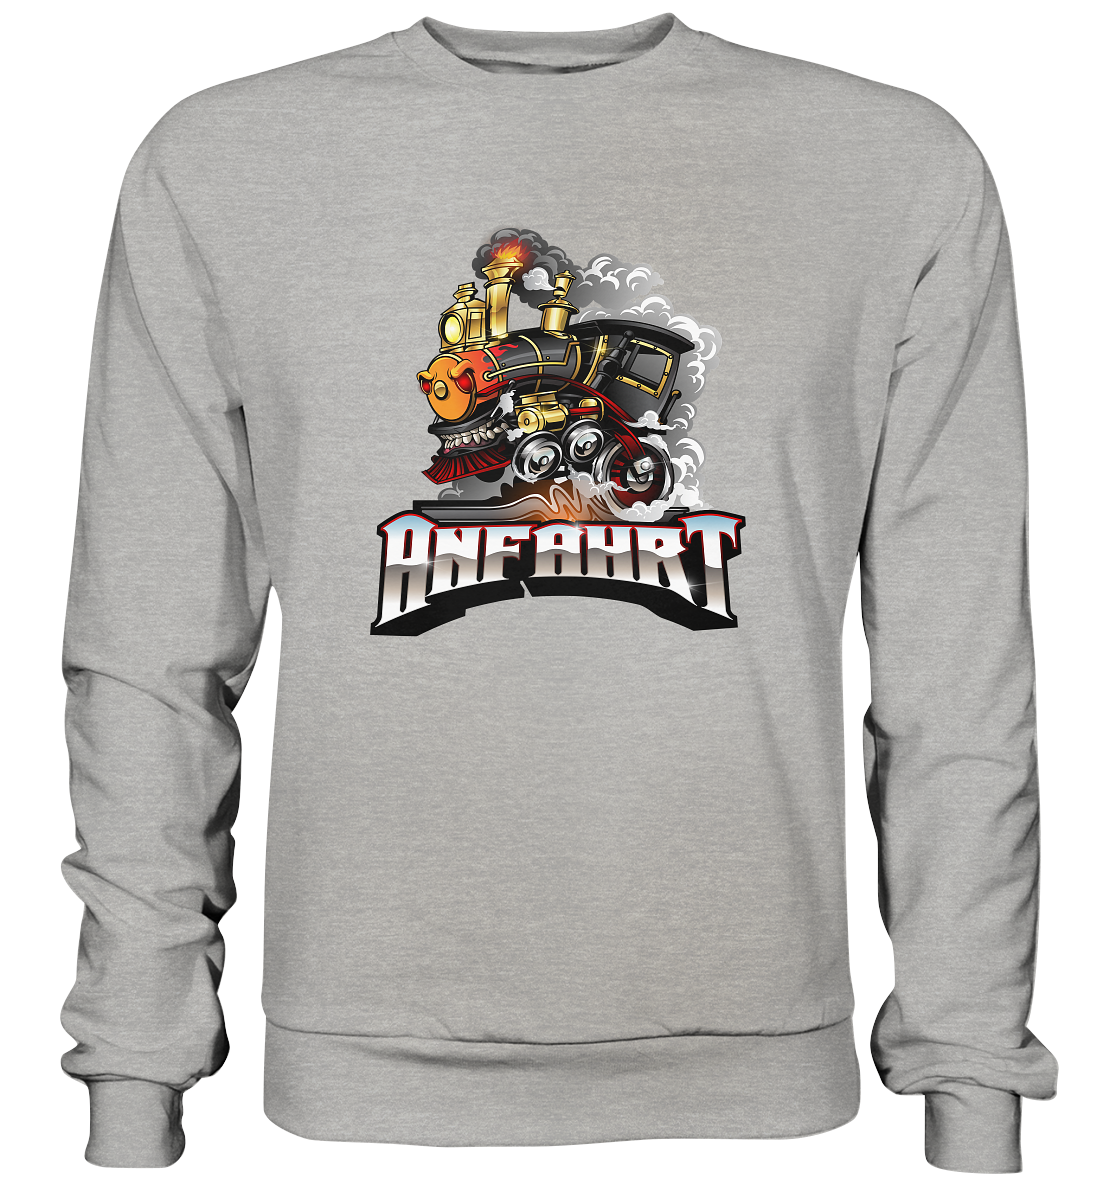 ANFAHRT - Basic Sweatshirt